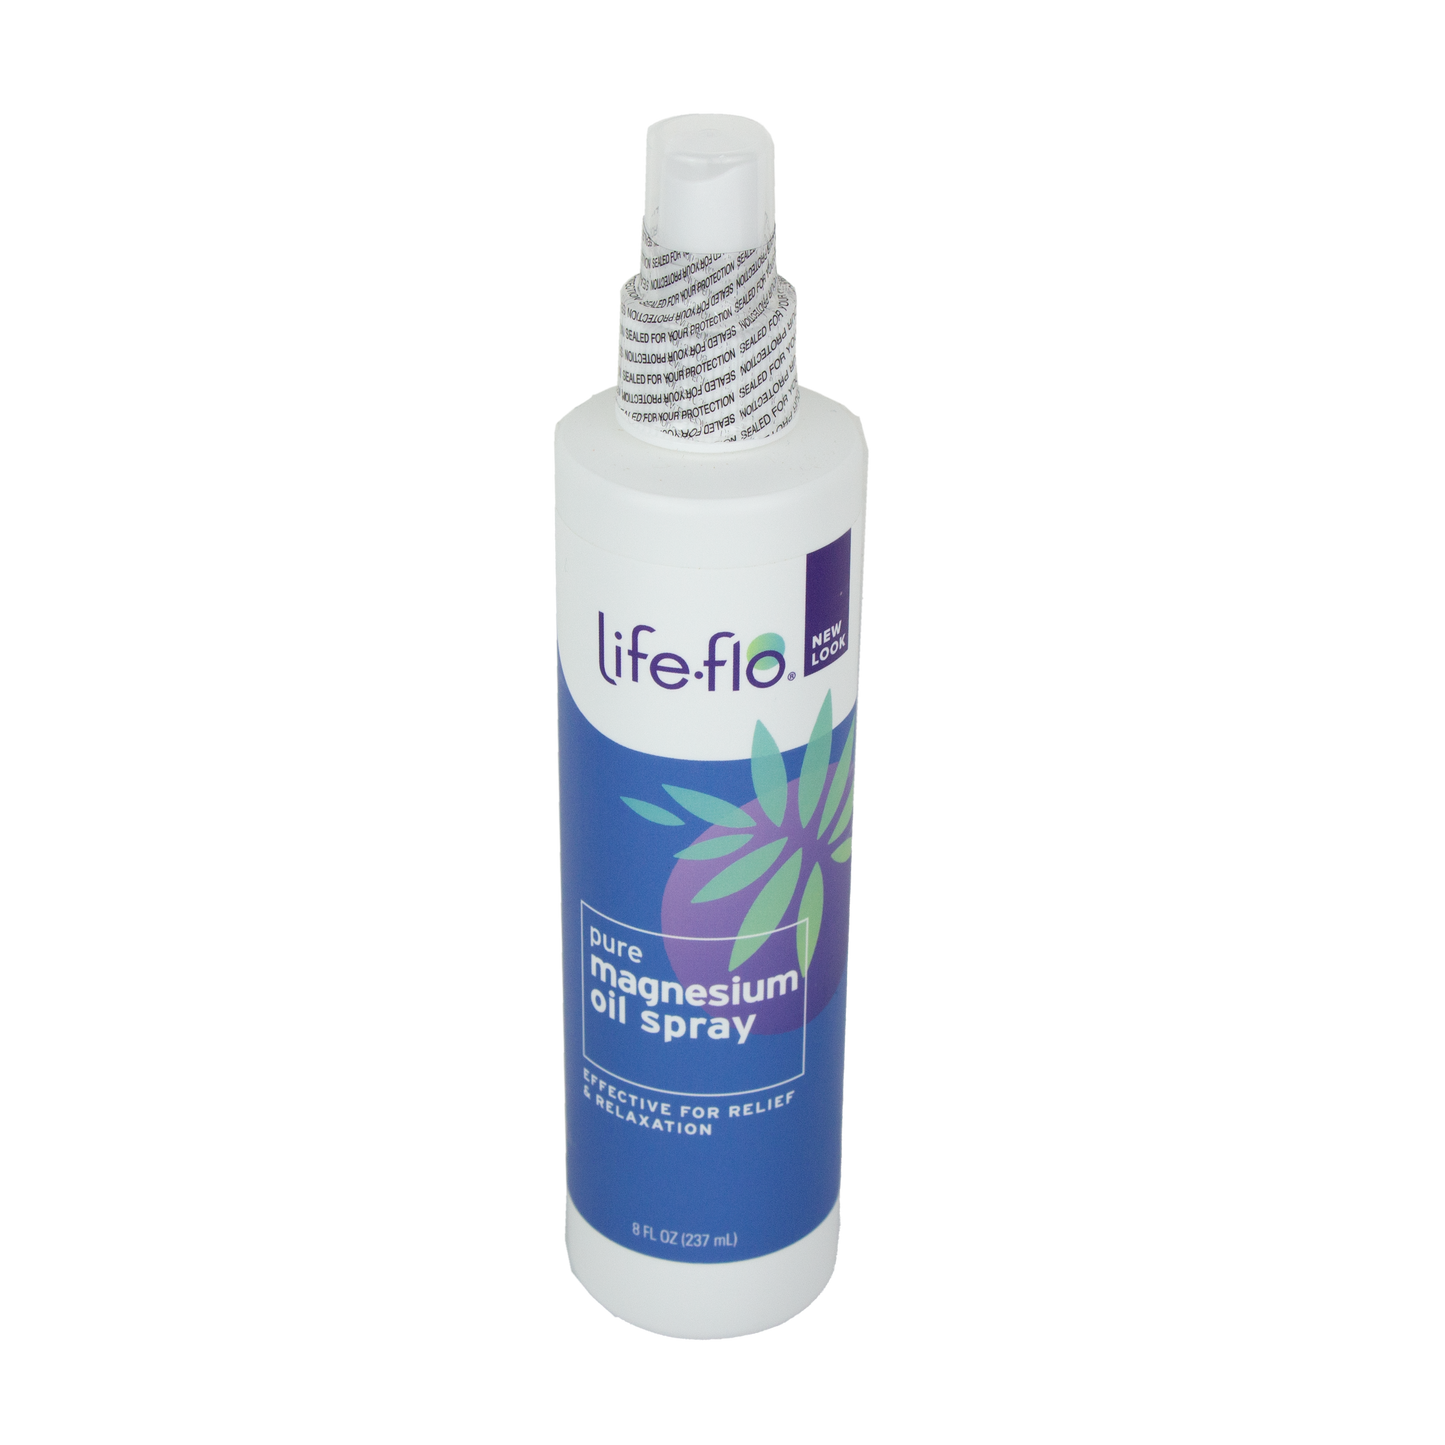 Life Flo - Magnesium Oil Spray